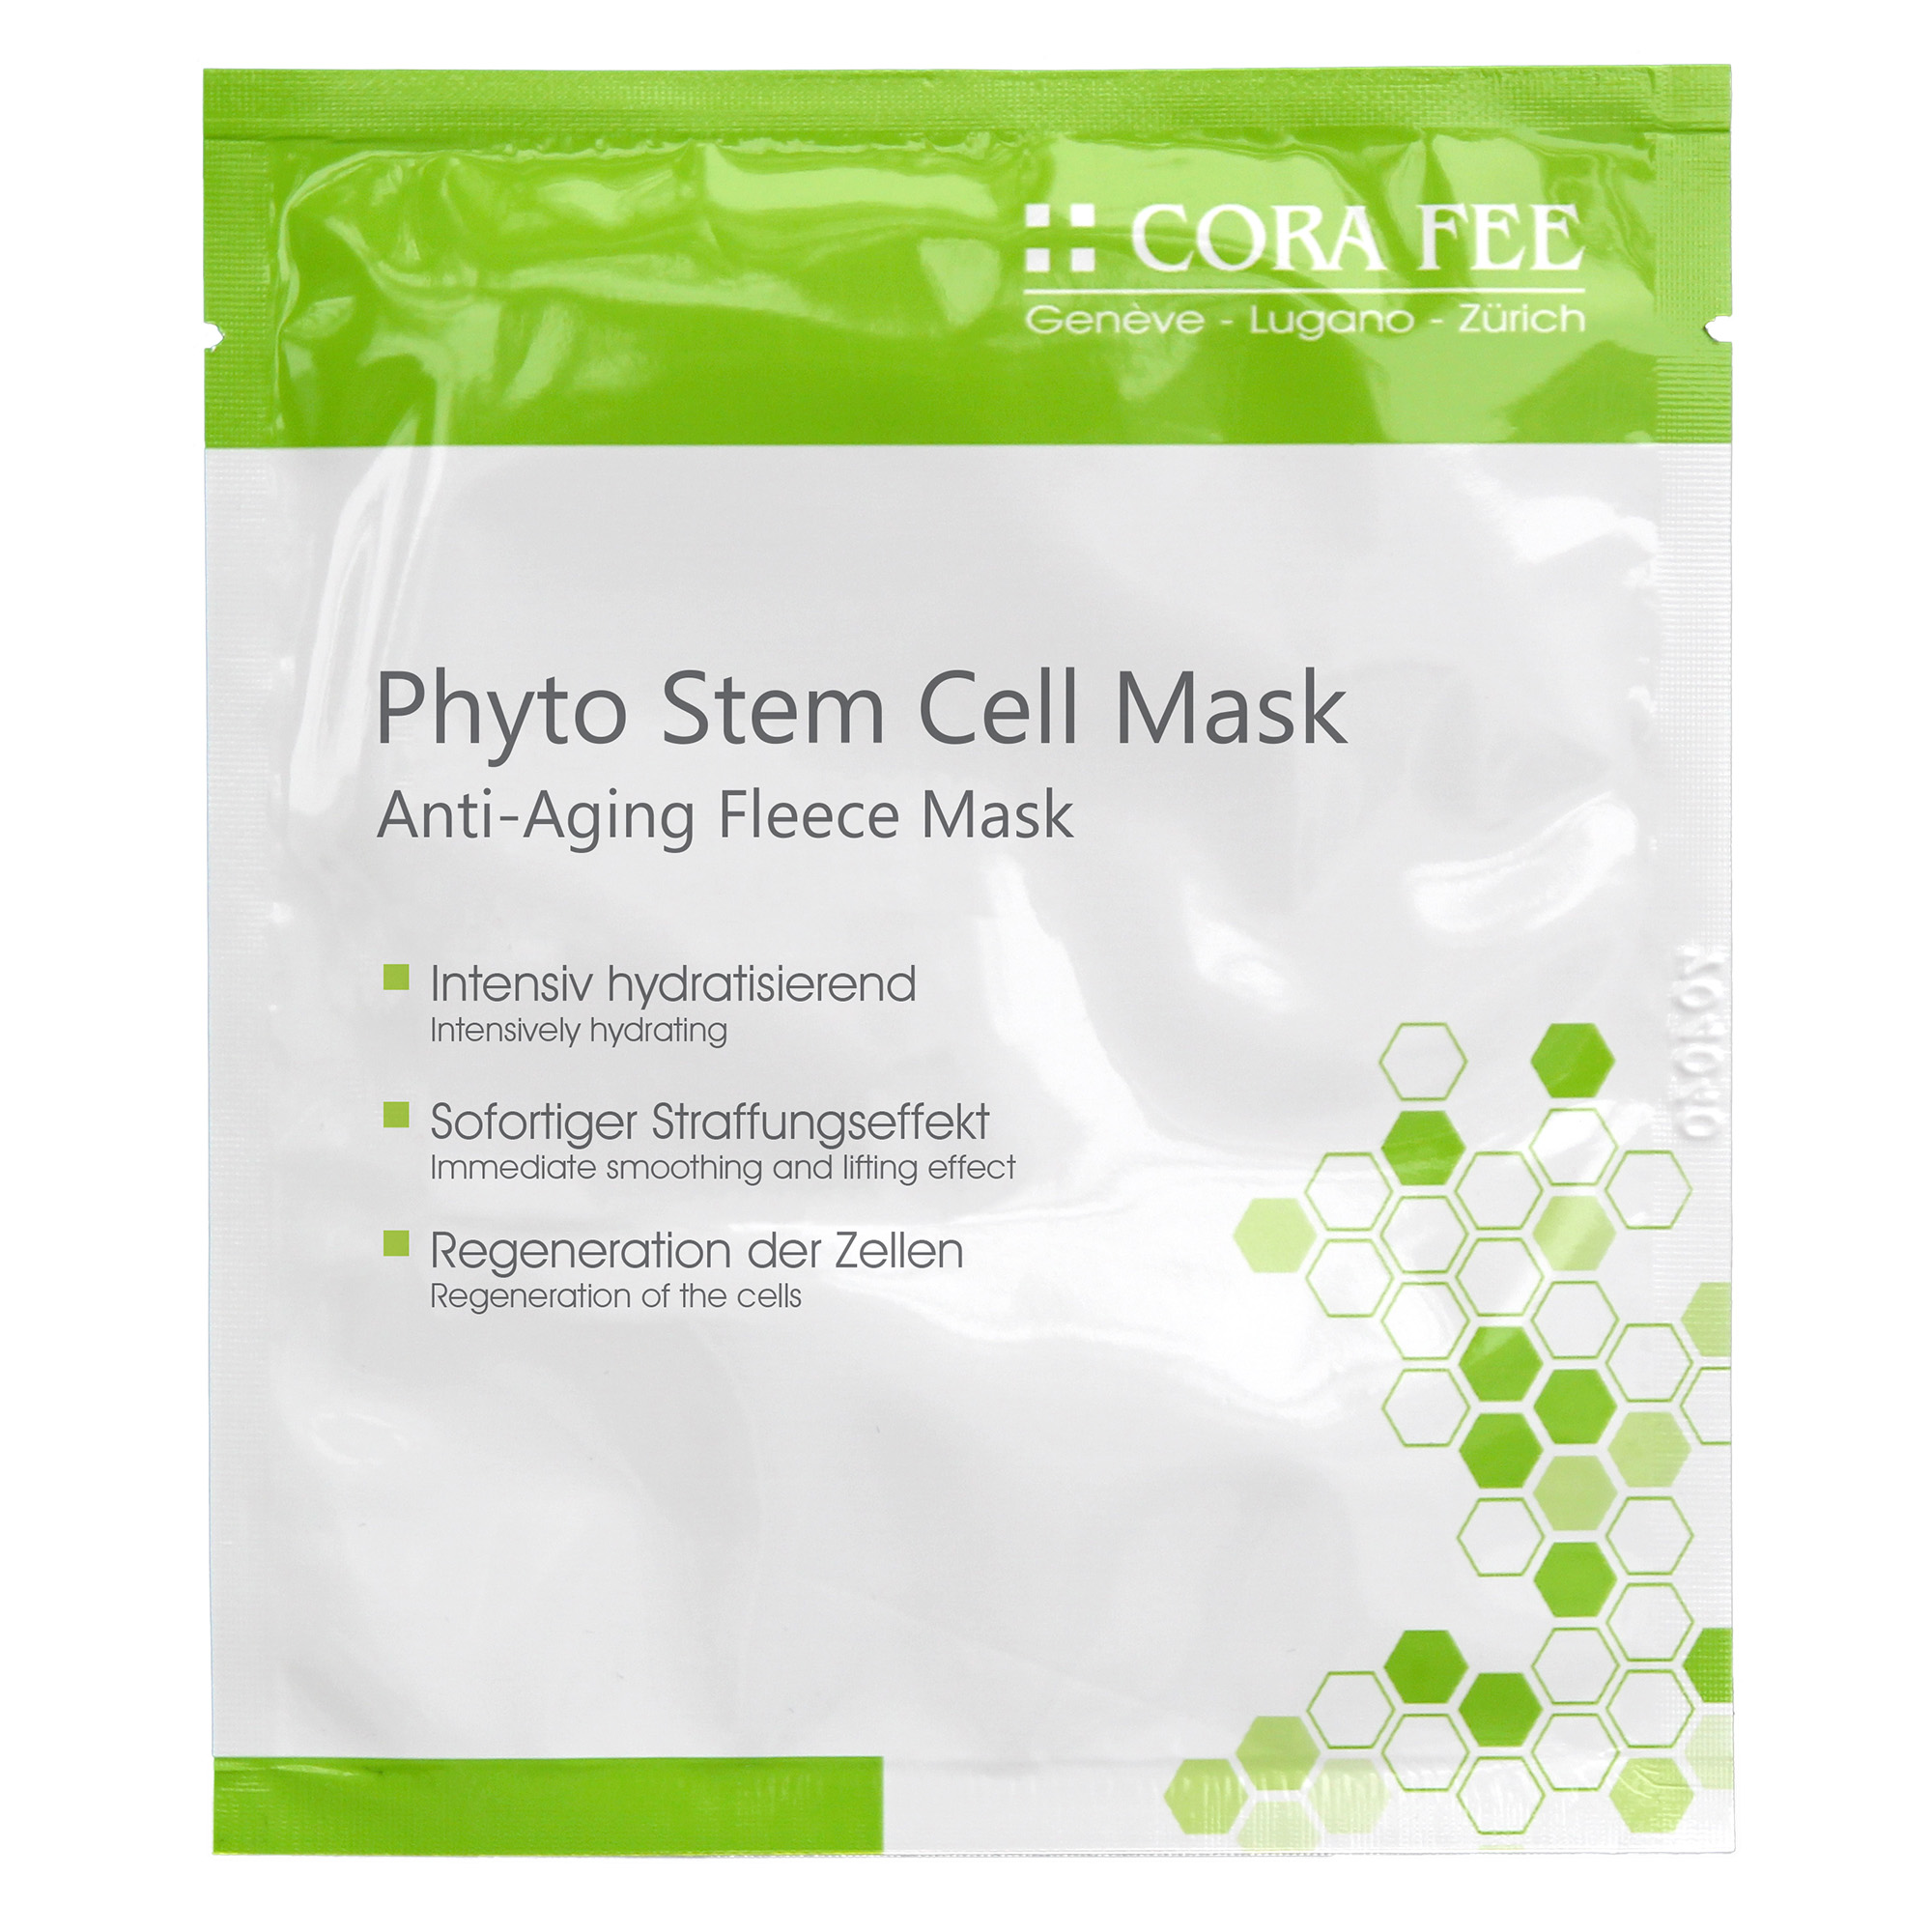 Cora fee Phyto Stem Cell Mask, 5 Vliesmasken